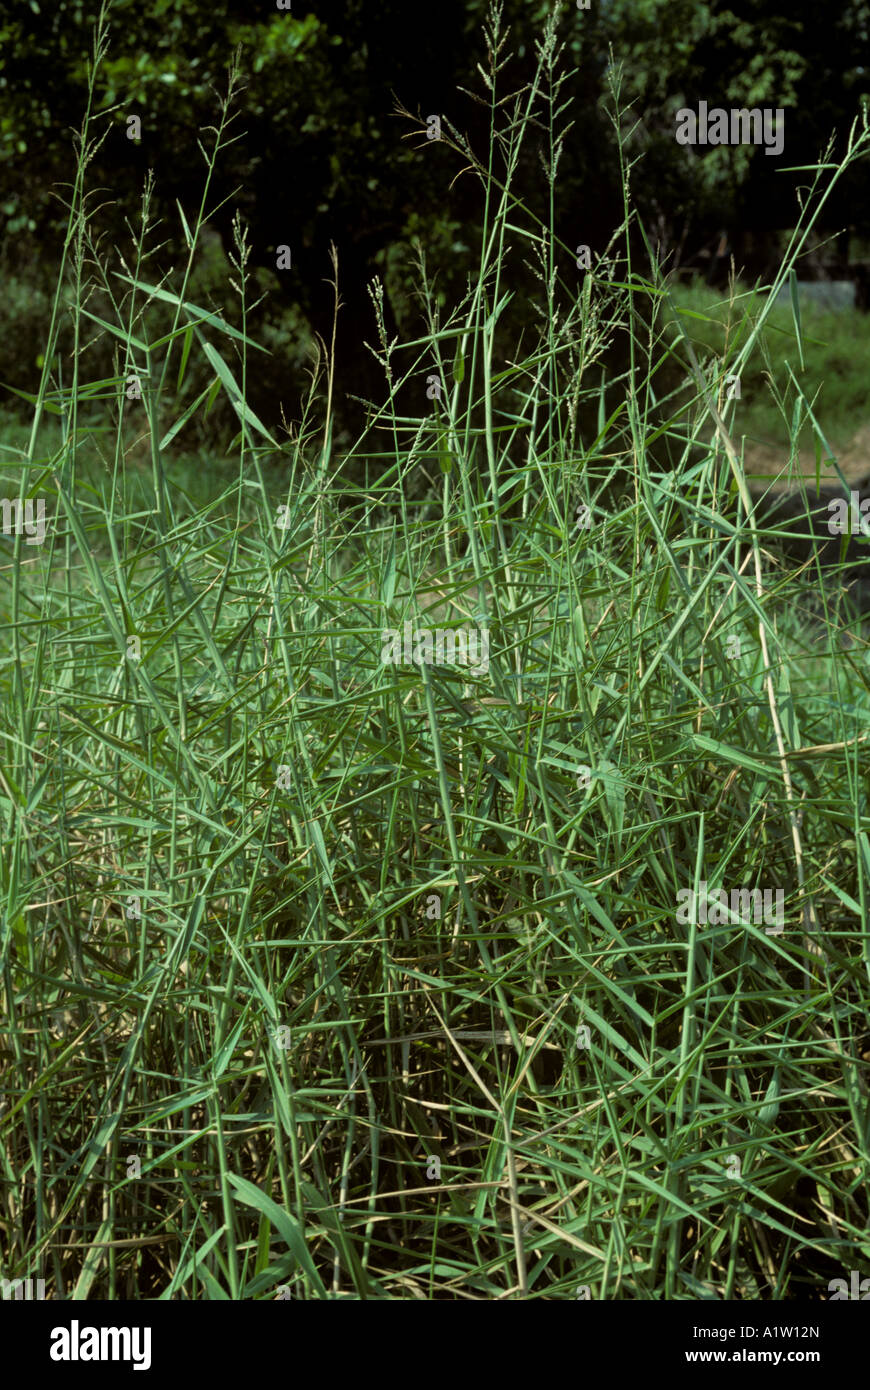 Buffalo grass or Mauritius signal grass Brachiaria mutica flowering plants Thailand Stock Photo